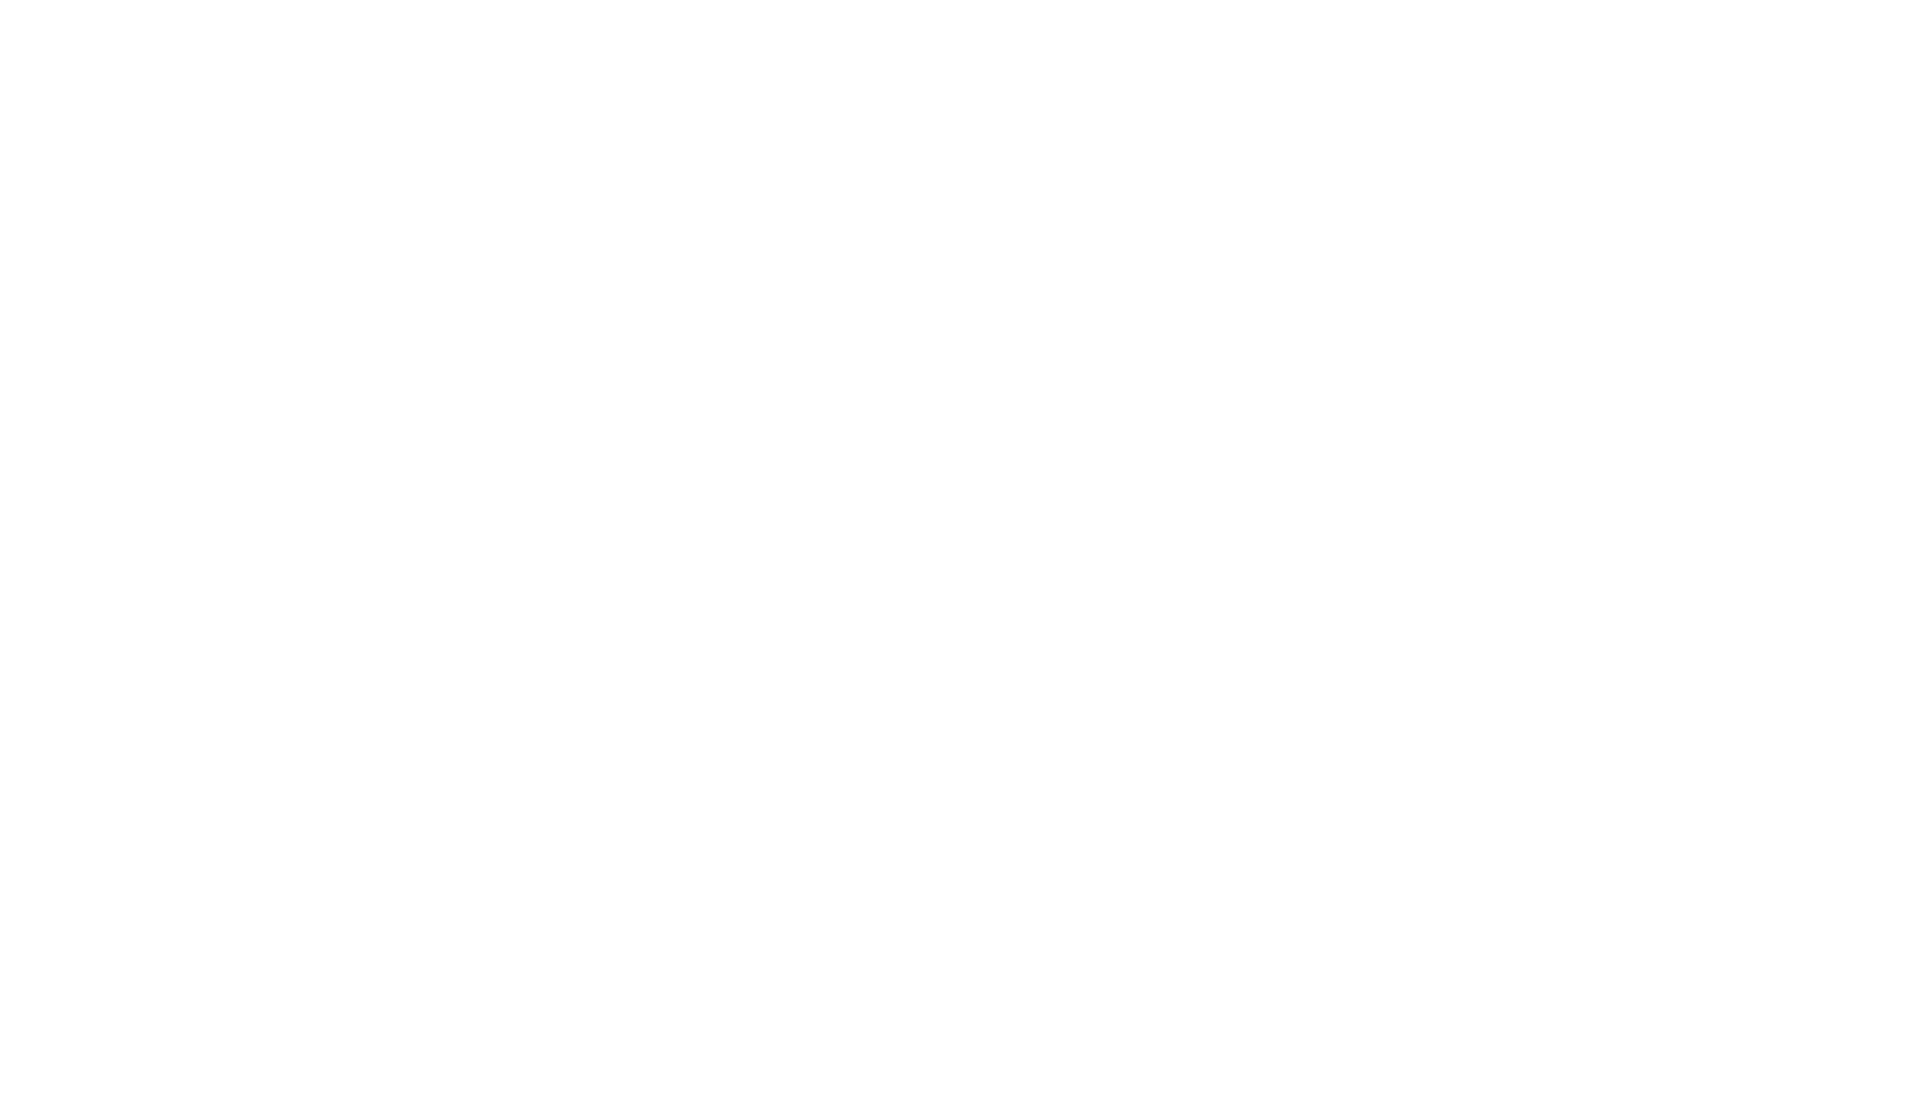 Windward communities logo - professionally managed by